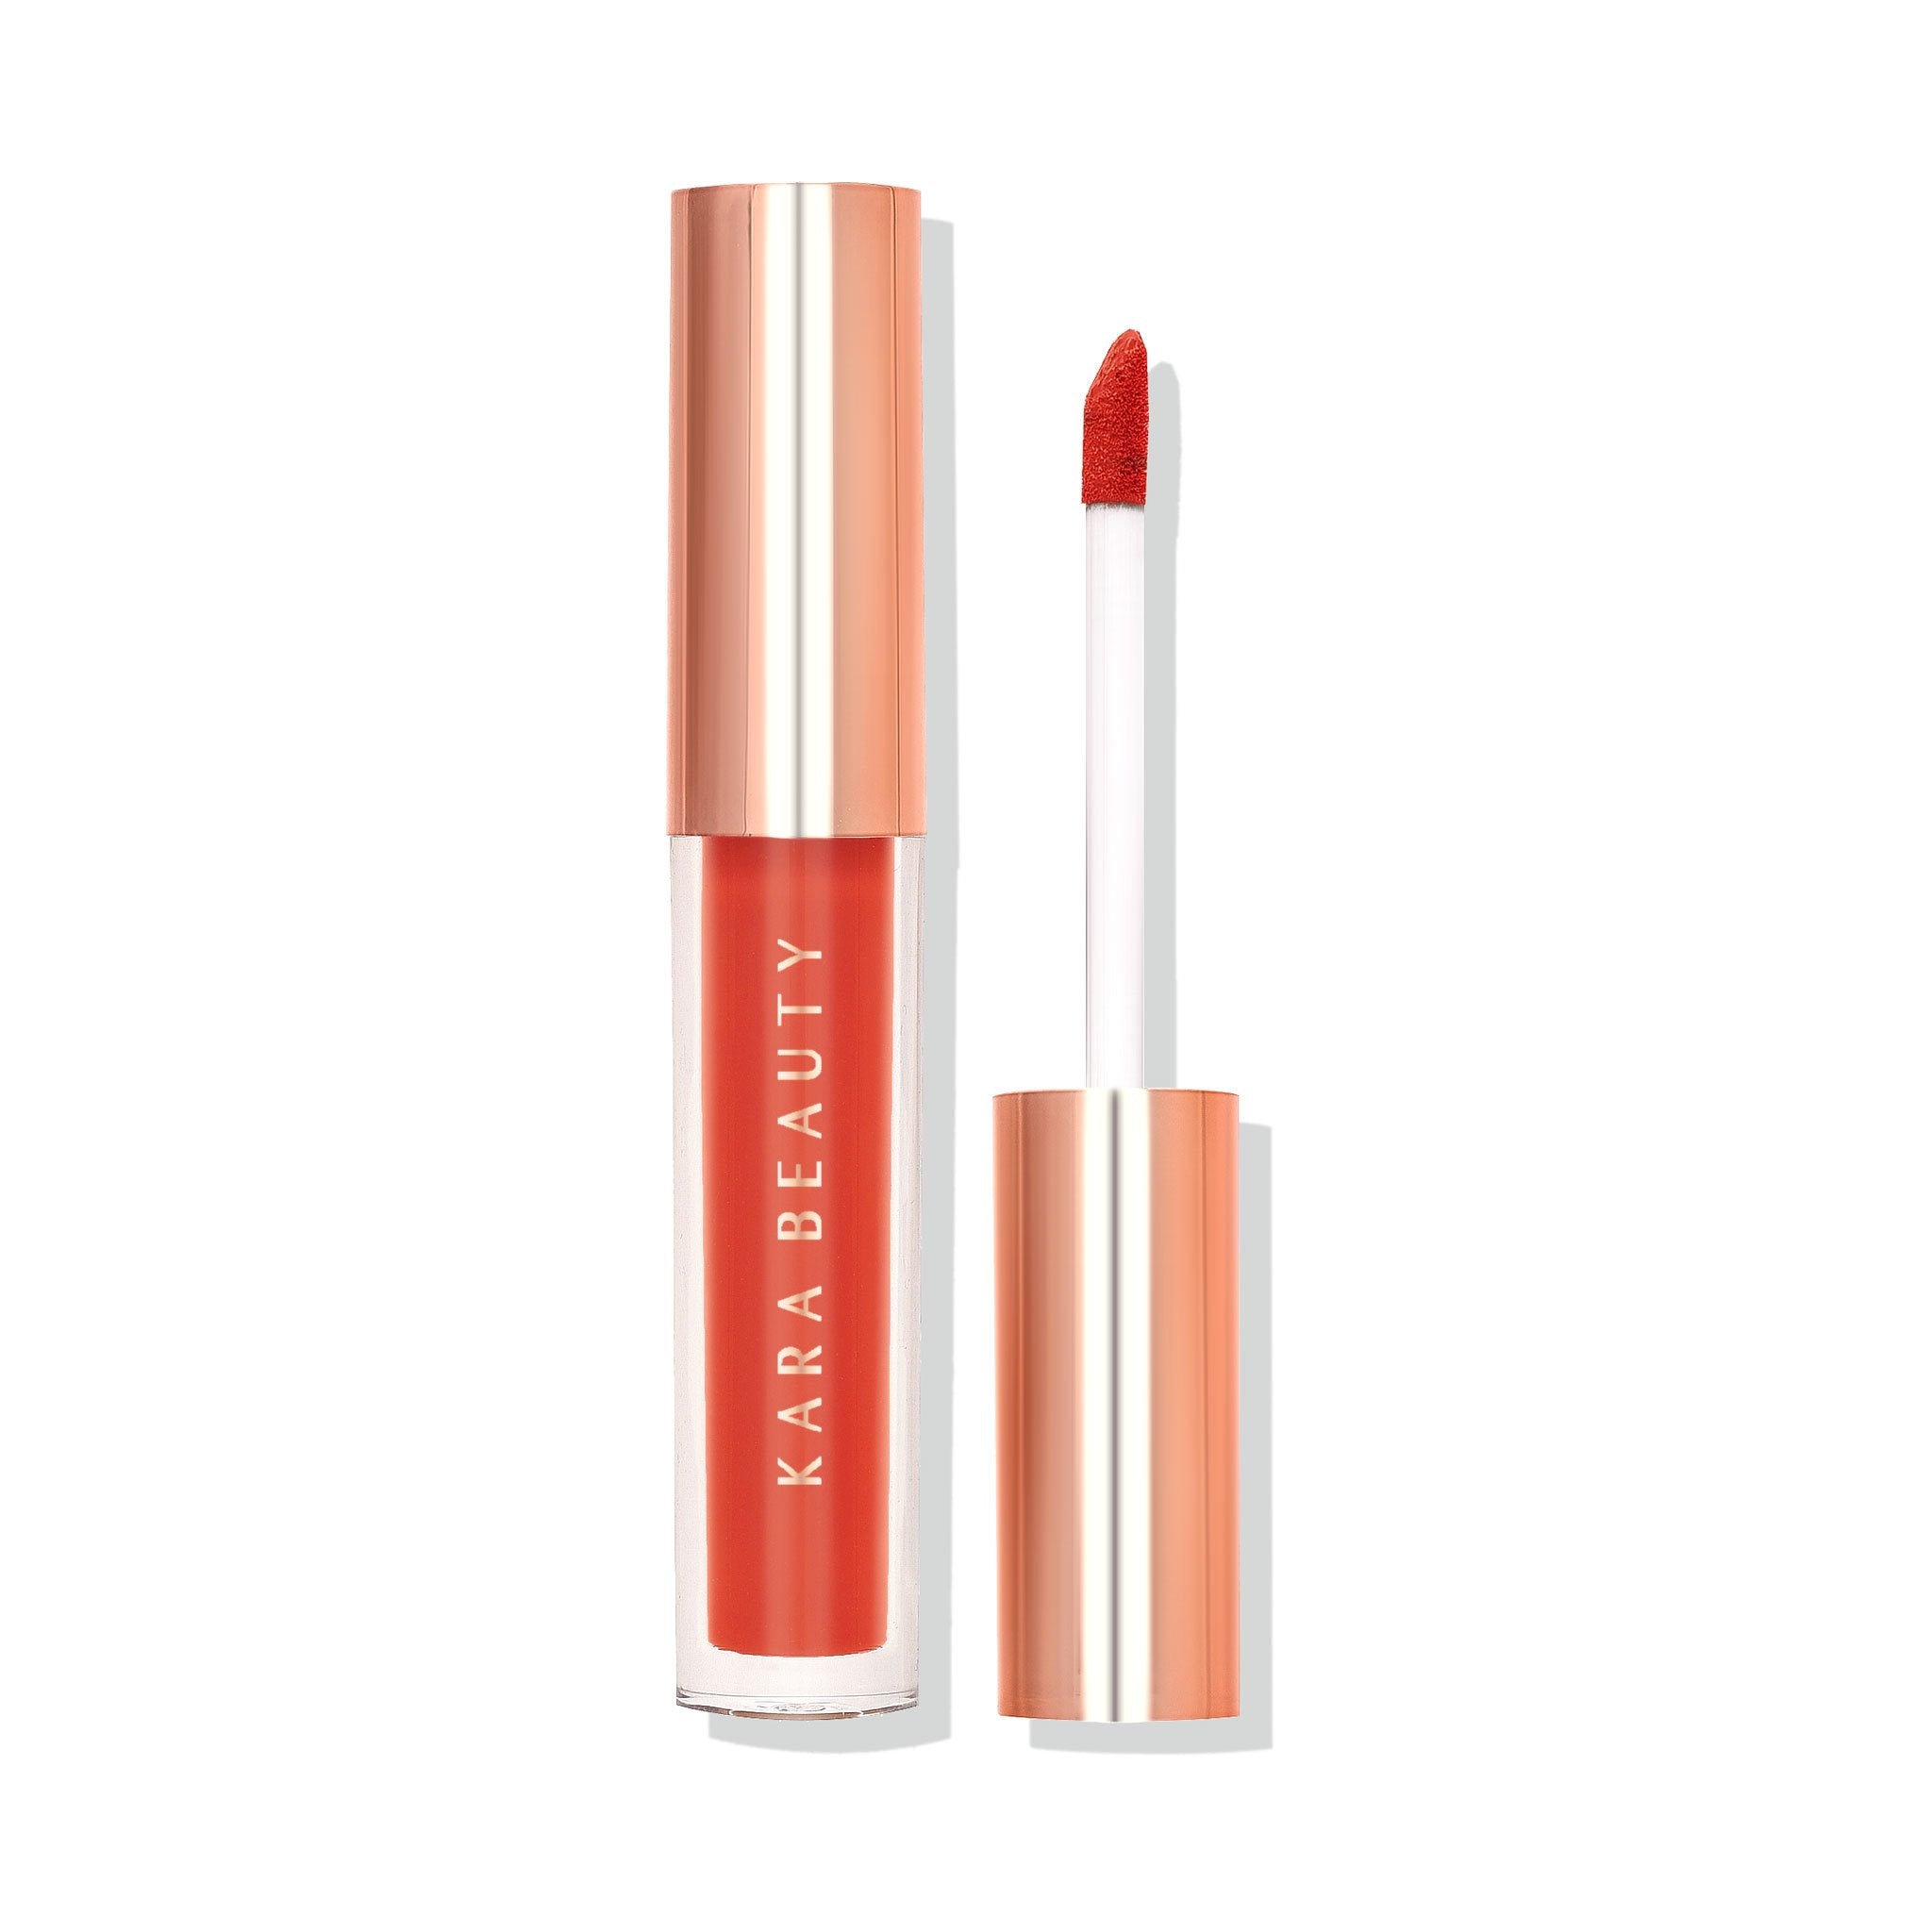 Flirt bight orange liquid lipstick